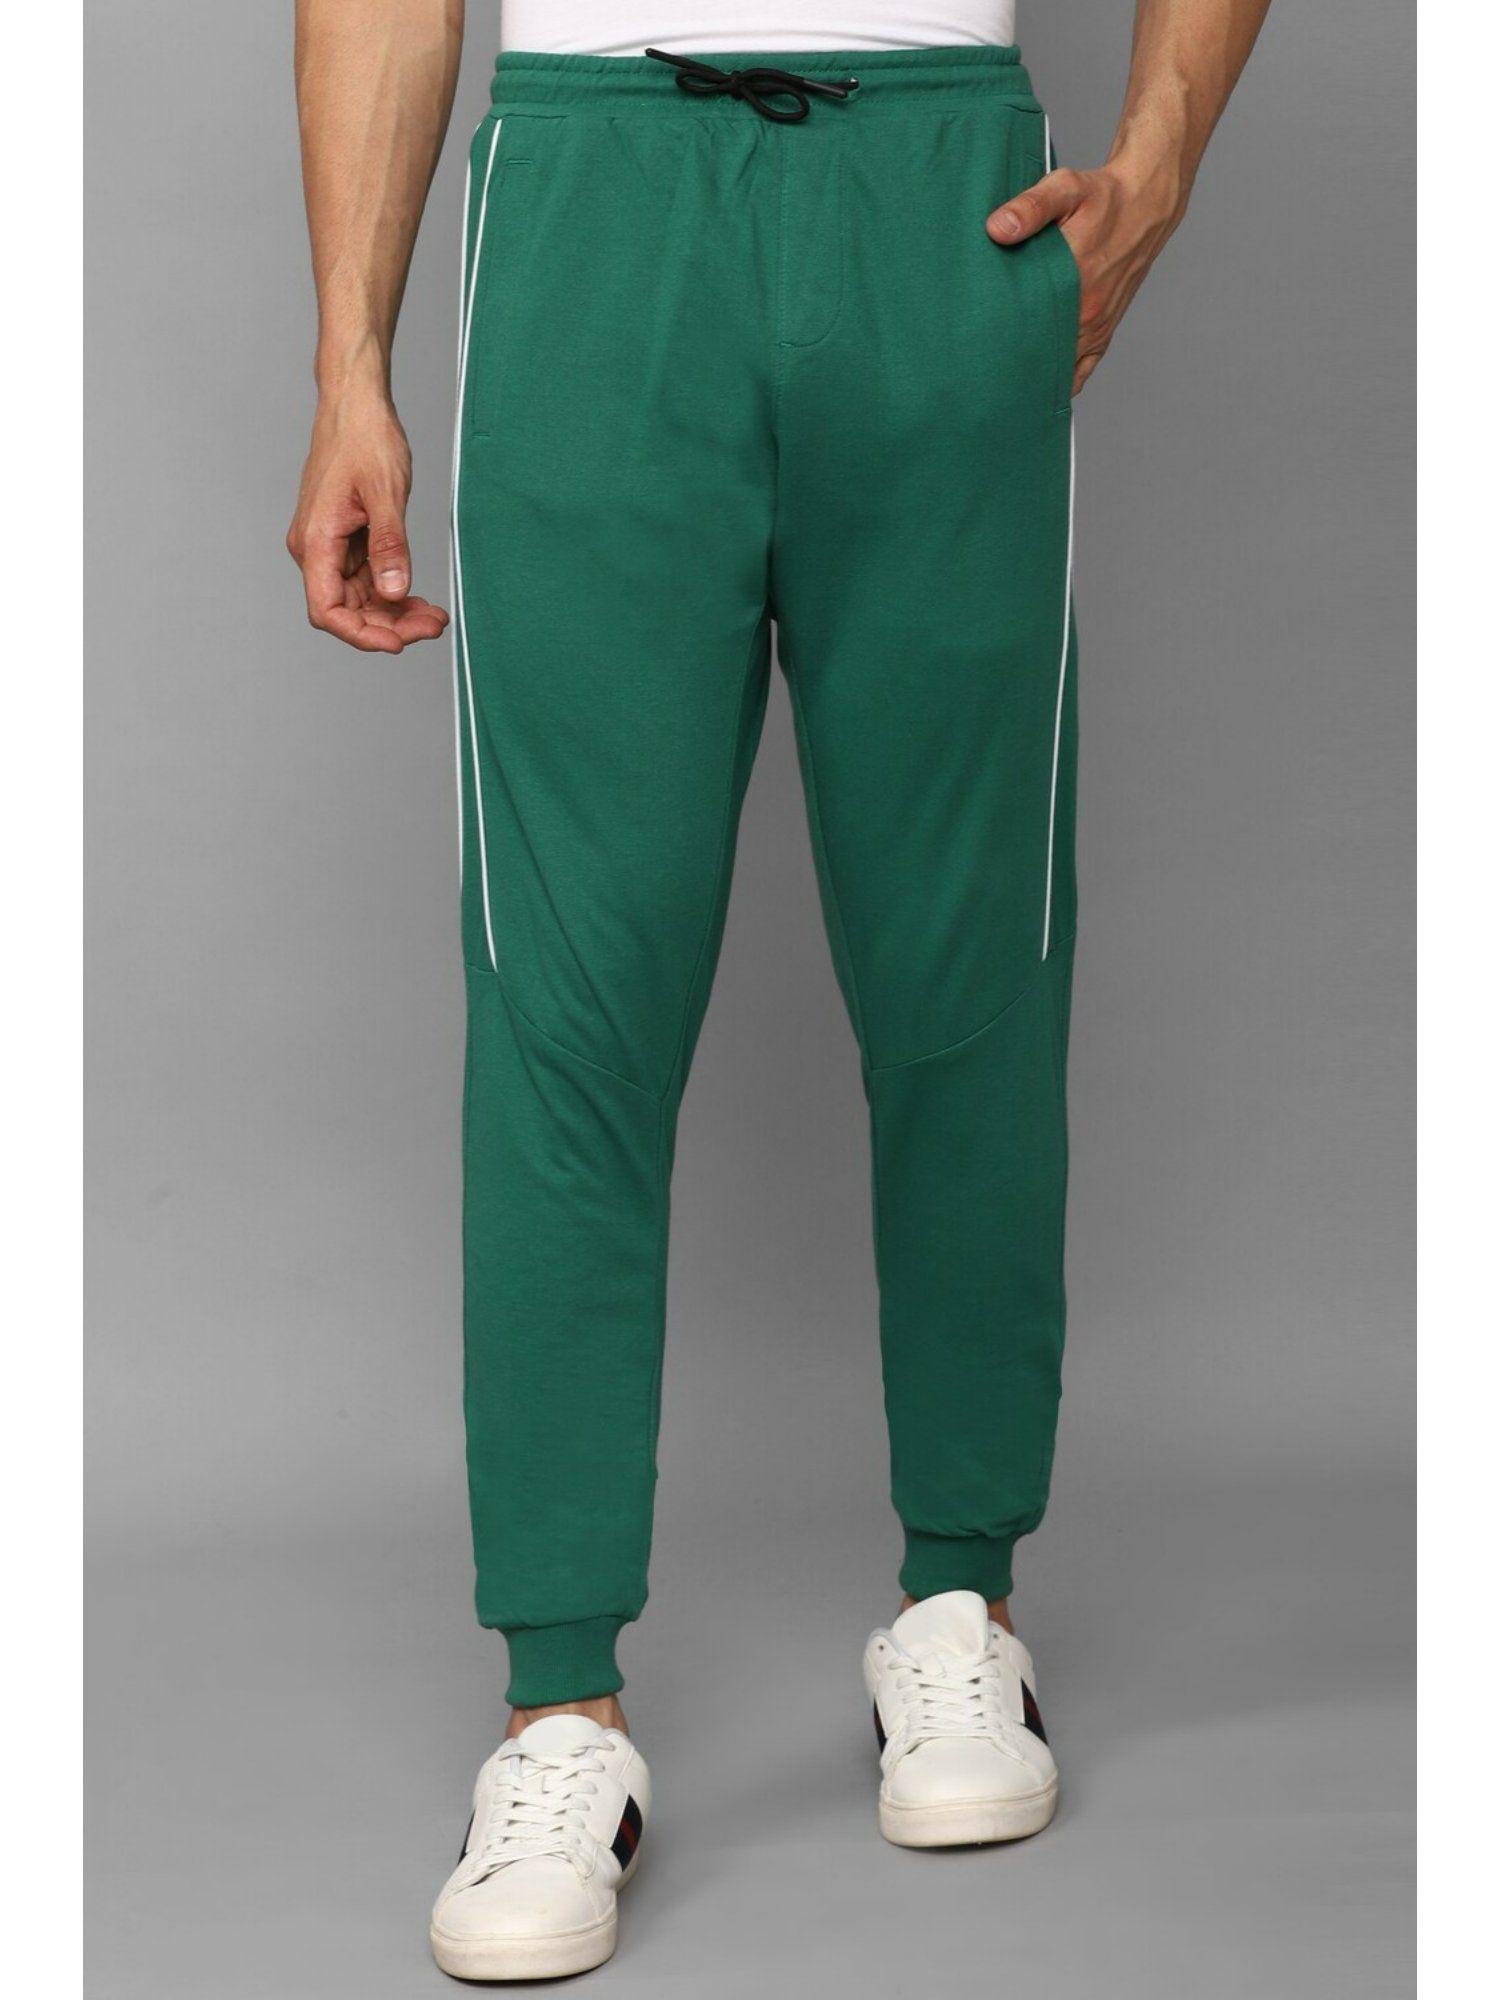 men-striped-regular-fit-green-jogger-pants